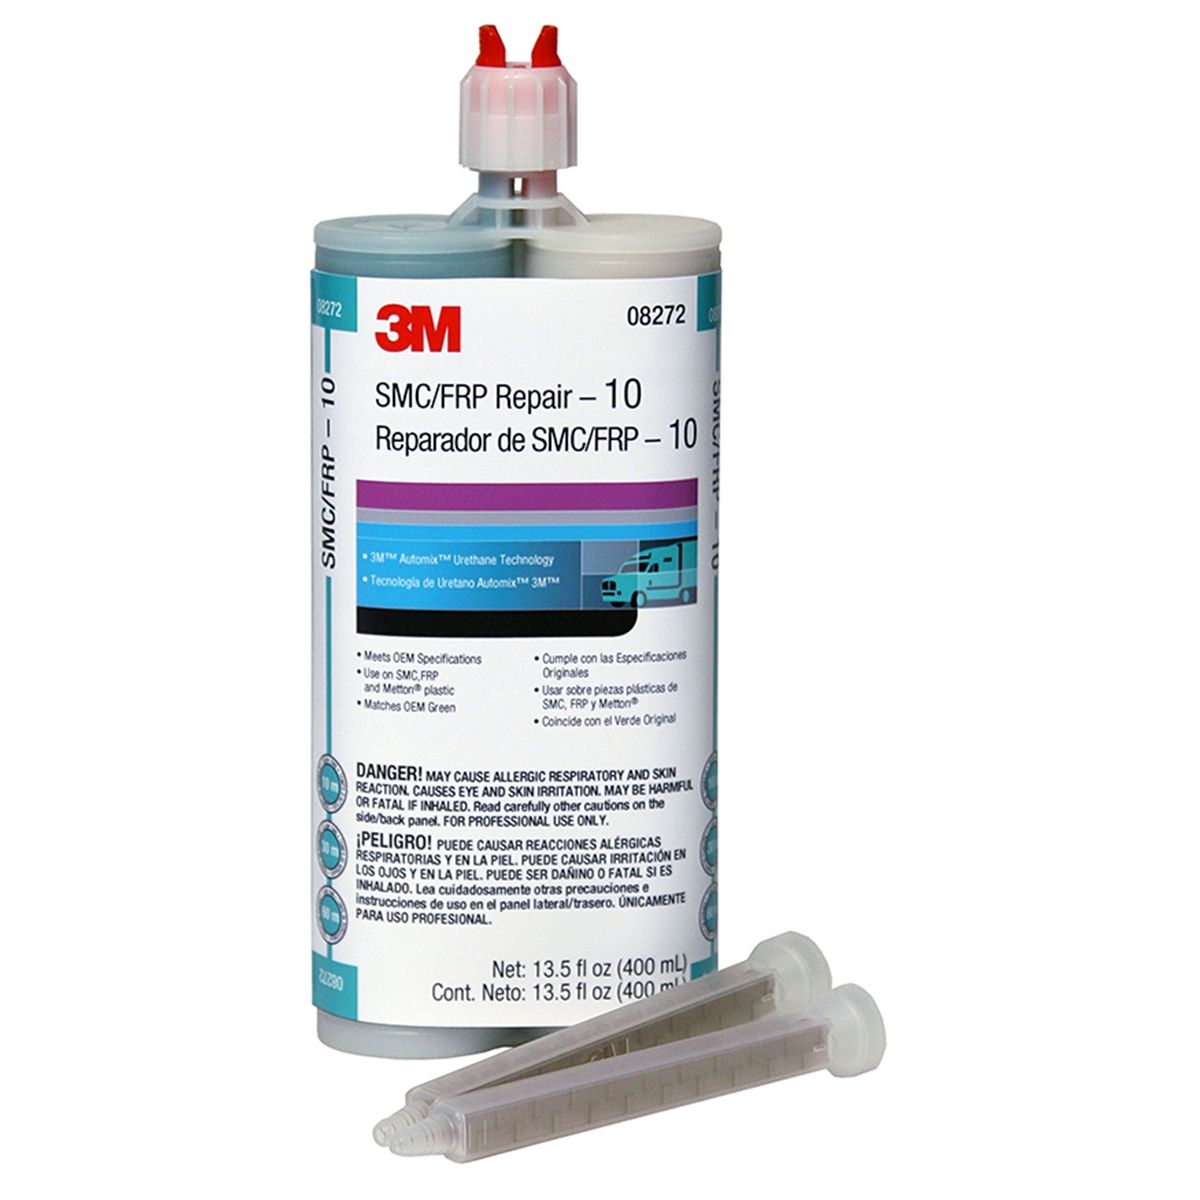 Urethane Adhesive for SMC/FRP Repair - 10, 400 mL